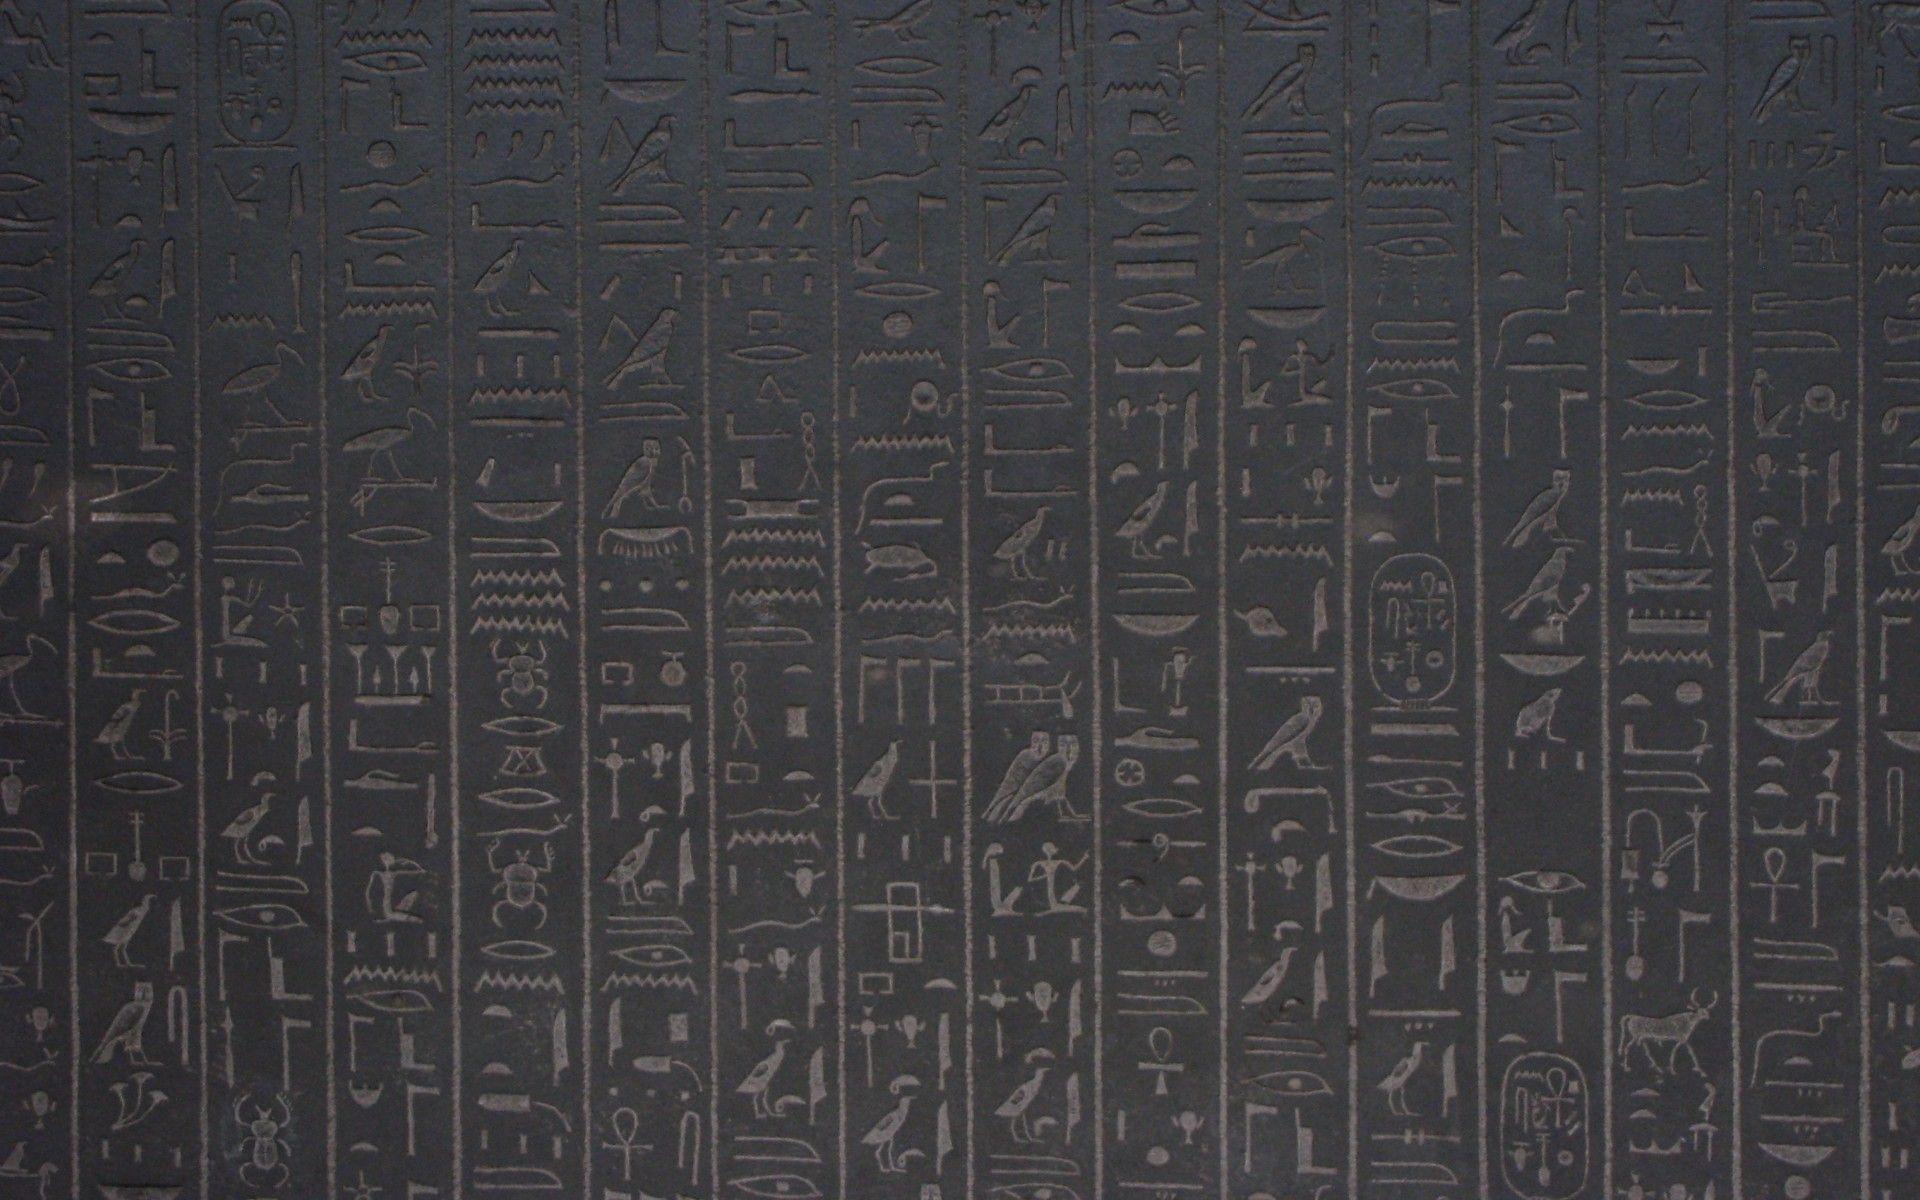 Egyptian Hieroglyphs Wallpapers - Wallpaper Cave